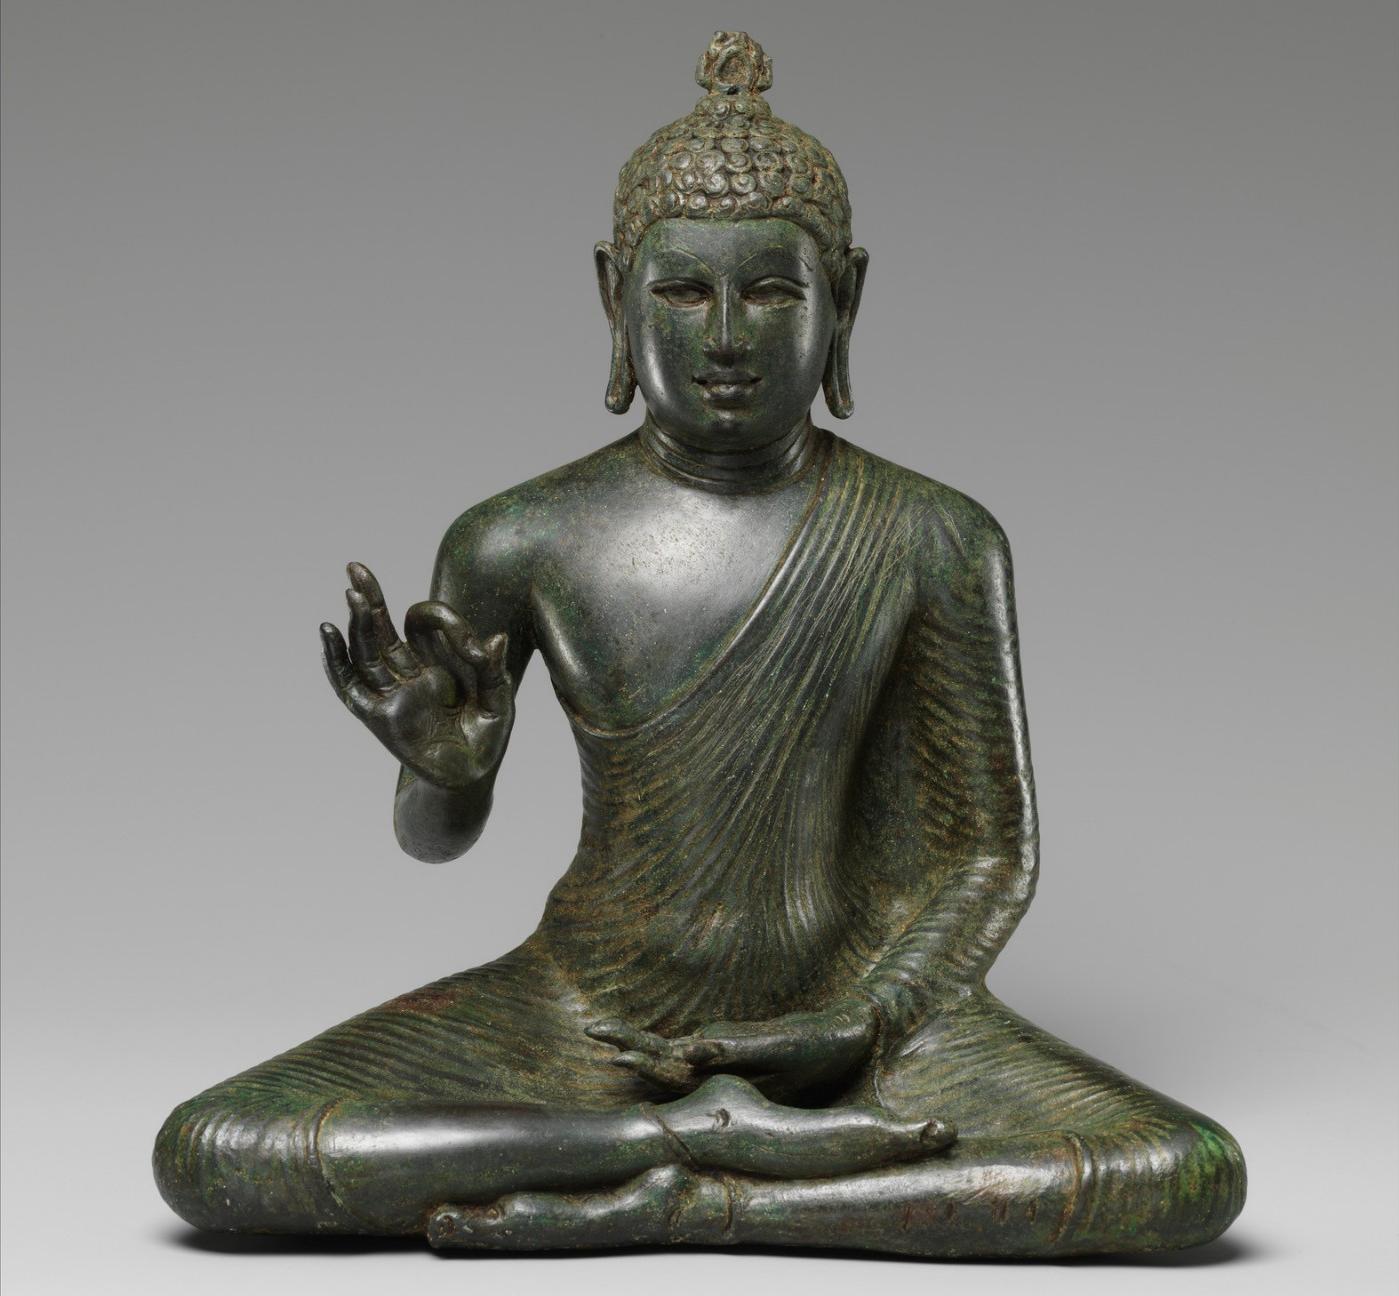 Seated Buddha, late 8th century